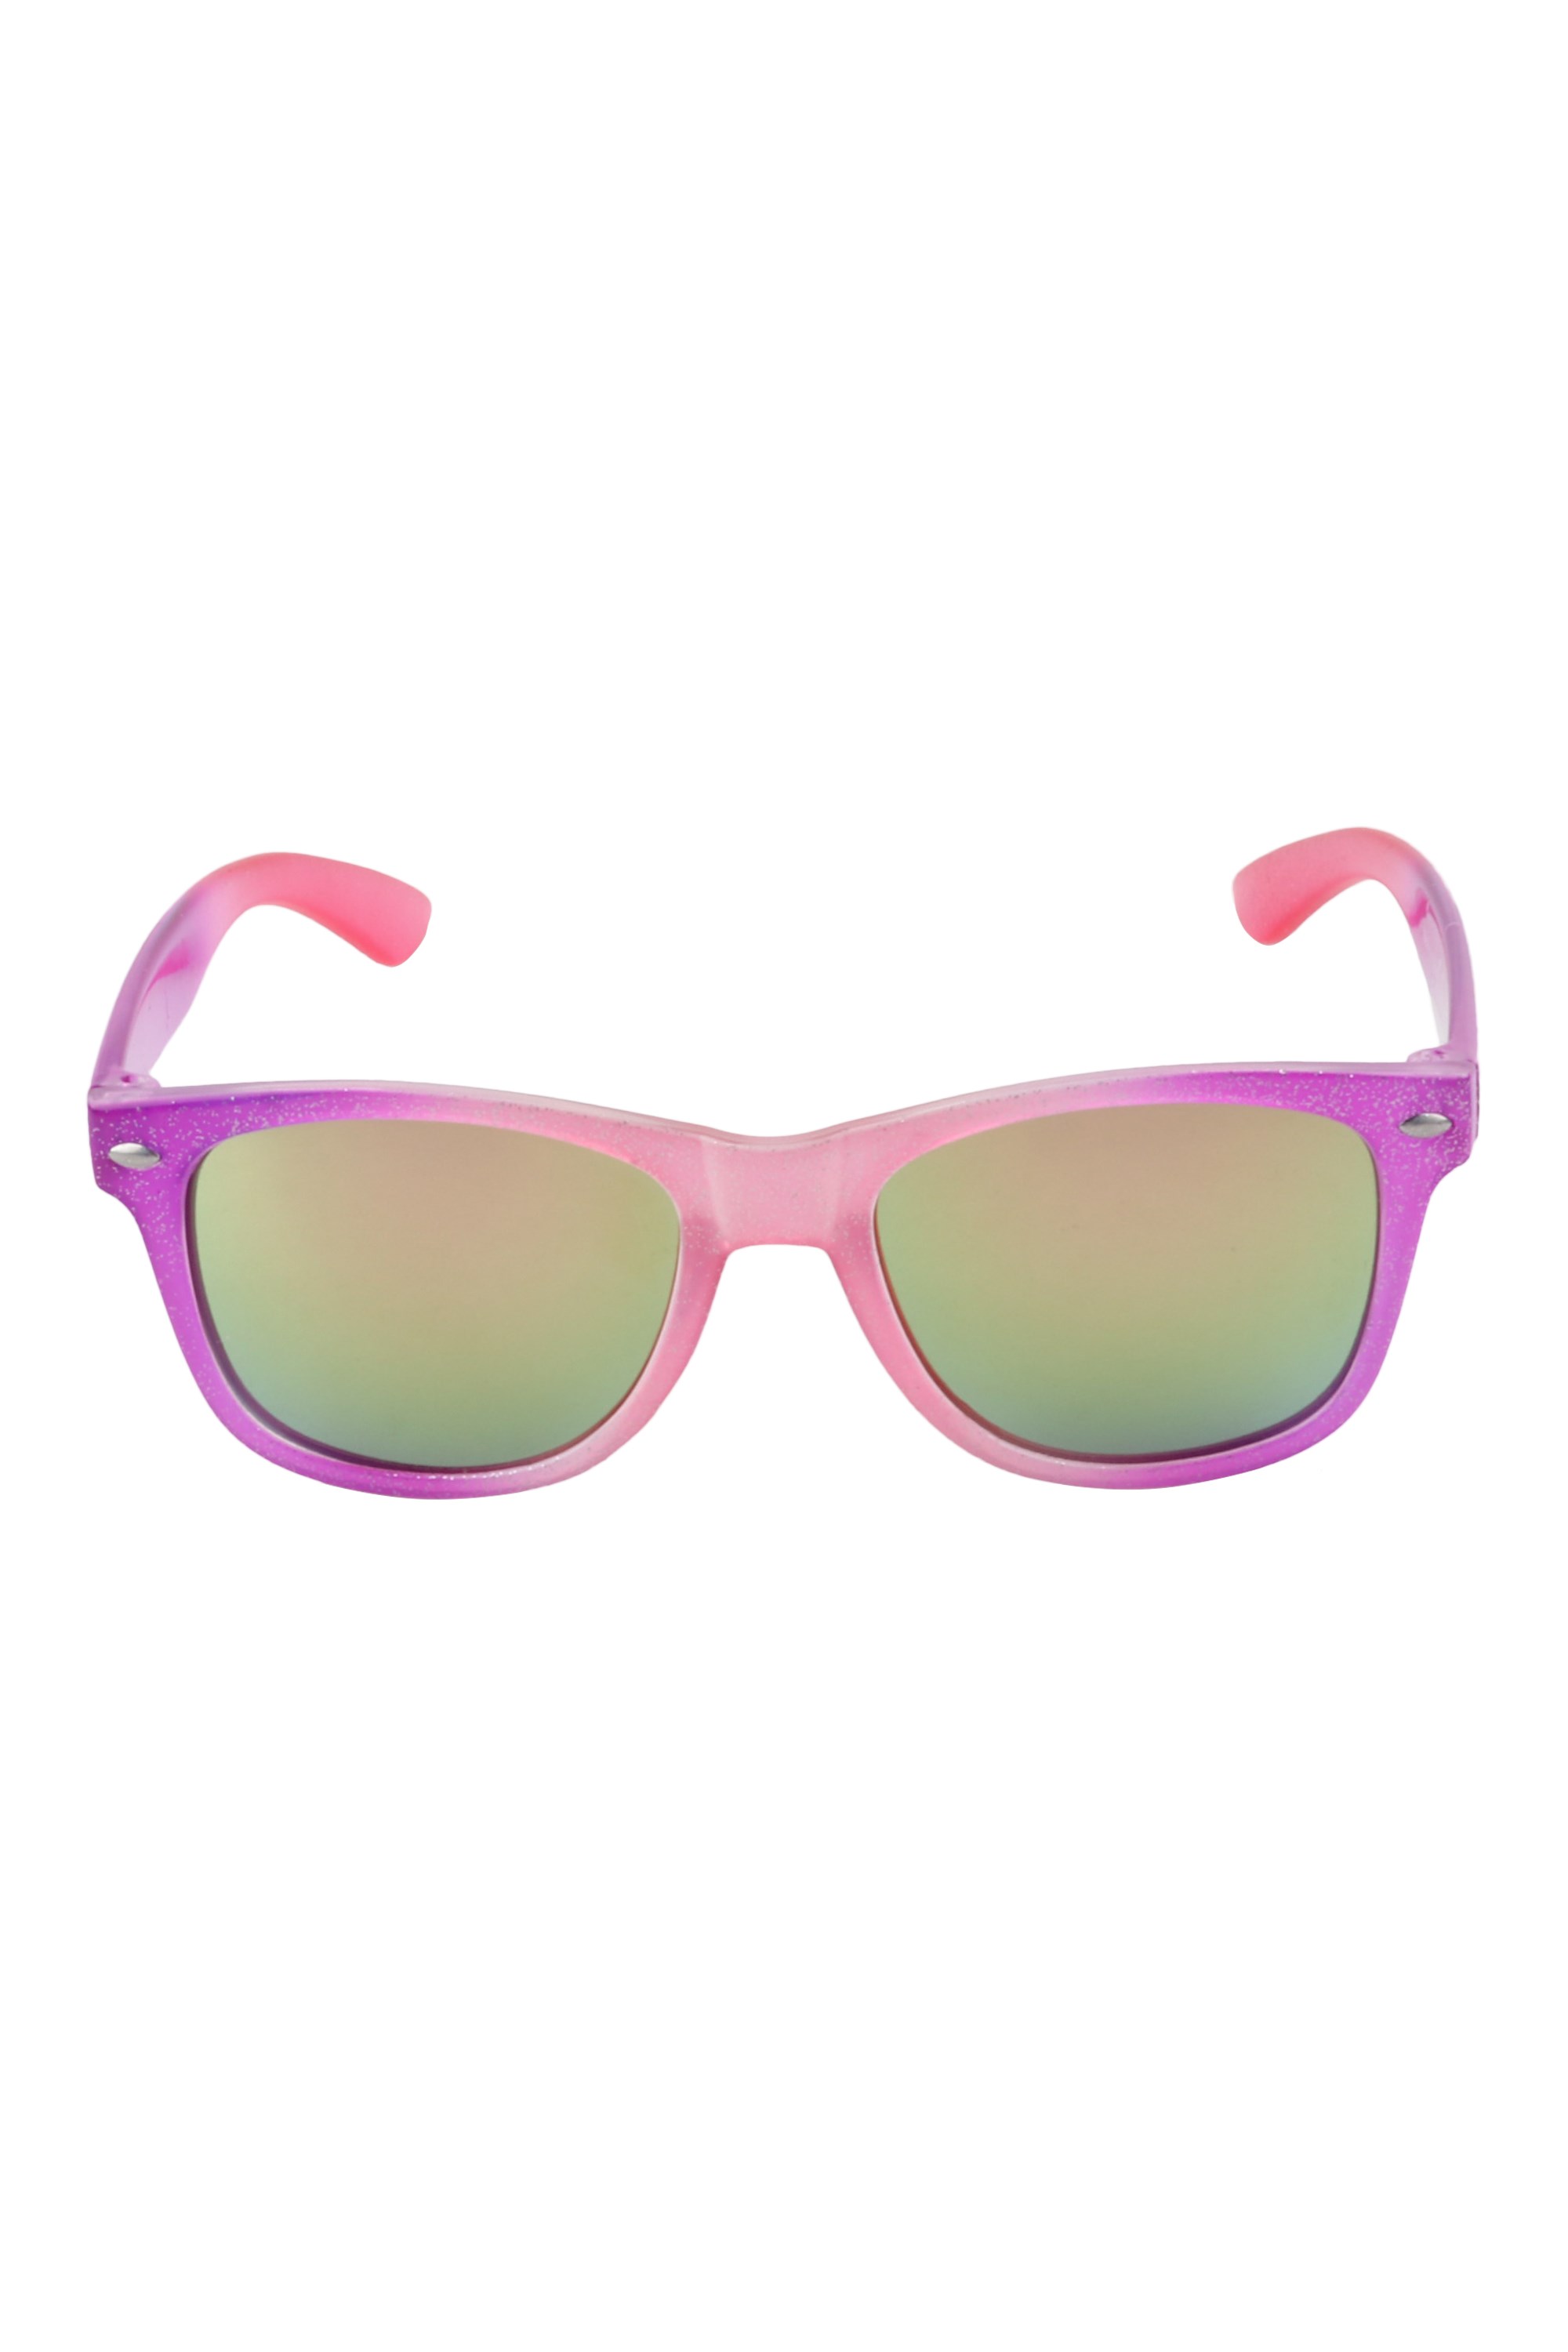 Mountain Warehouse Tahiti Kids Sunglasses Eyewear 